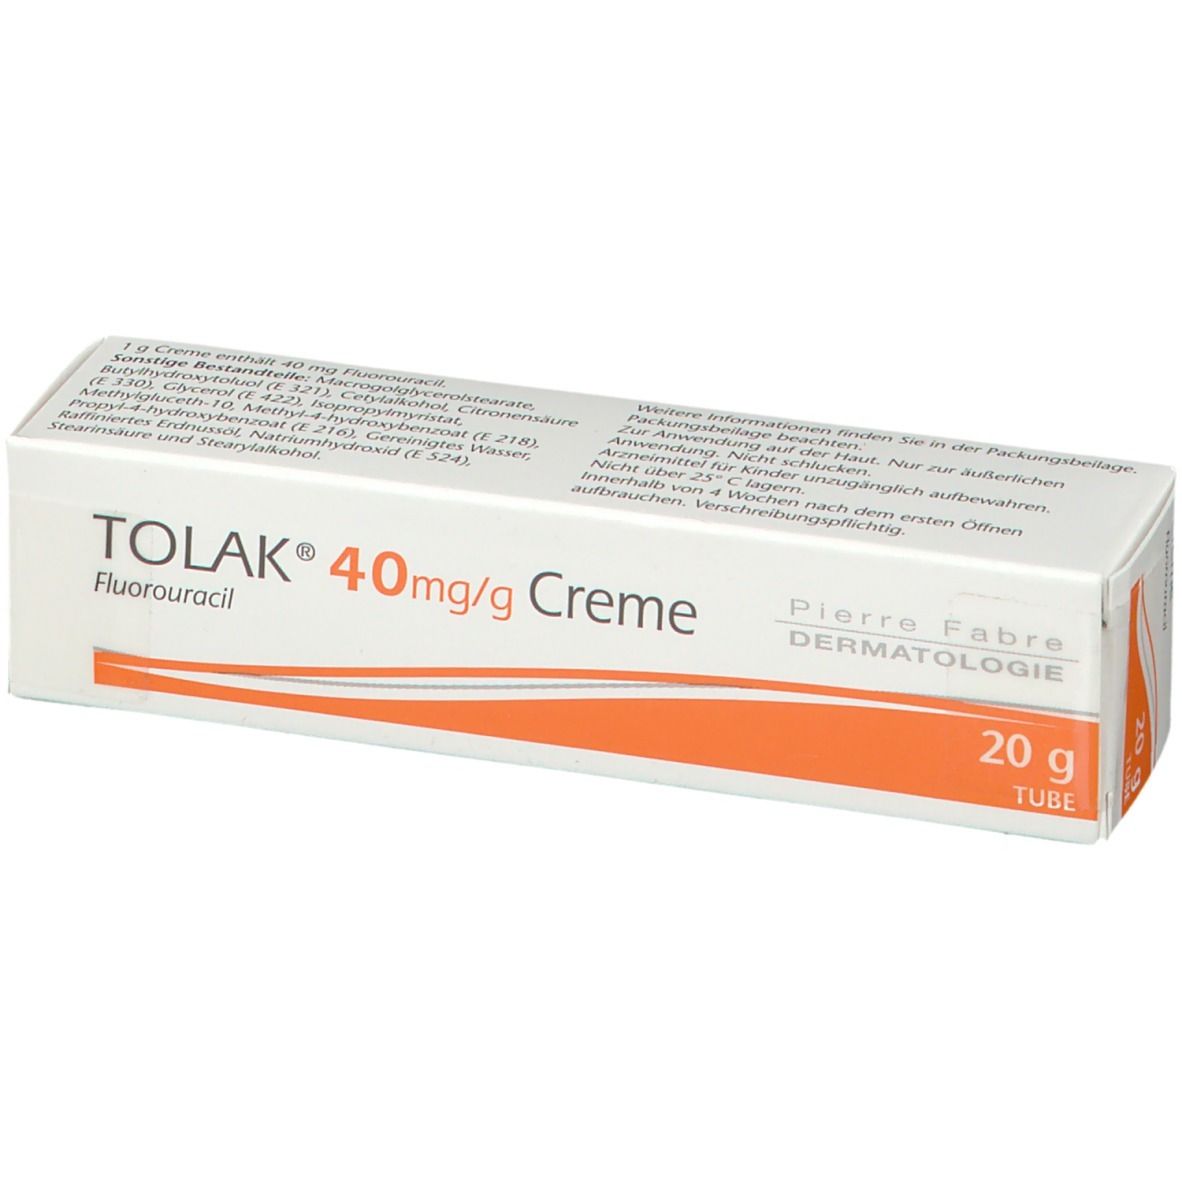 Tolak® 40 mg/g Creme